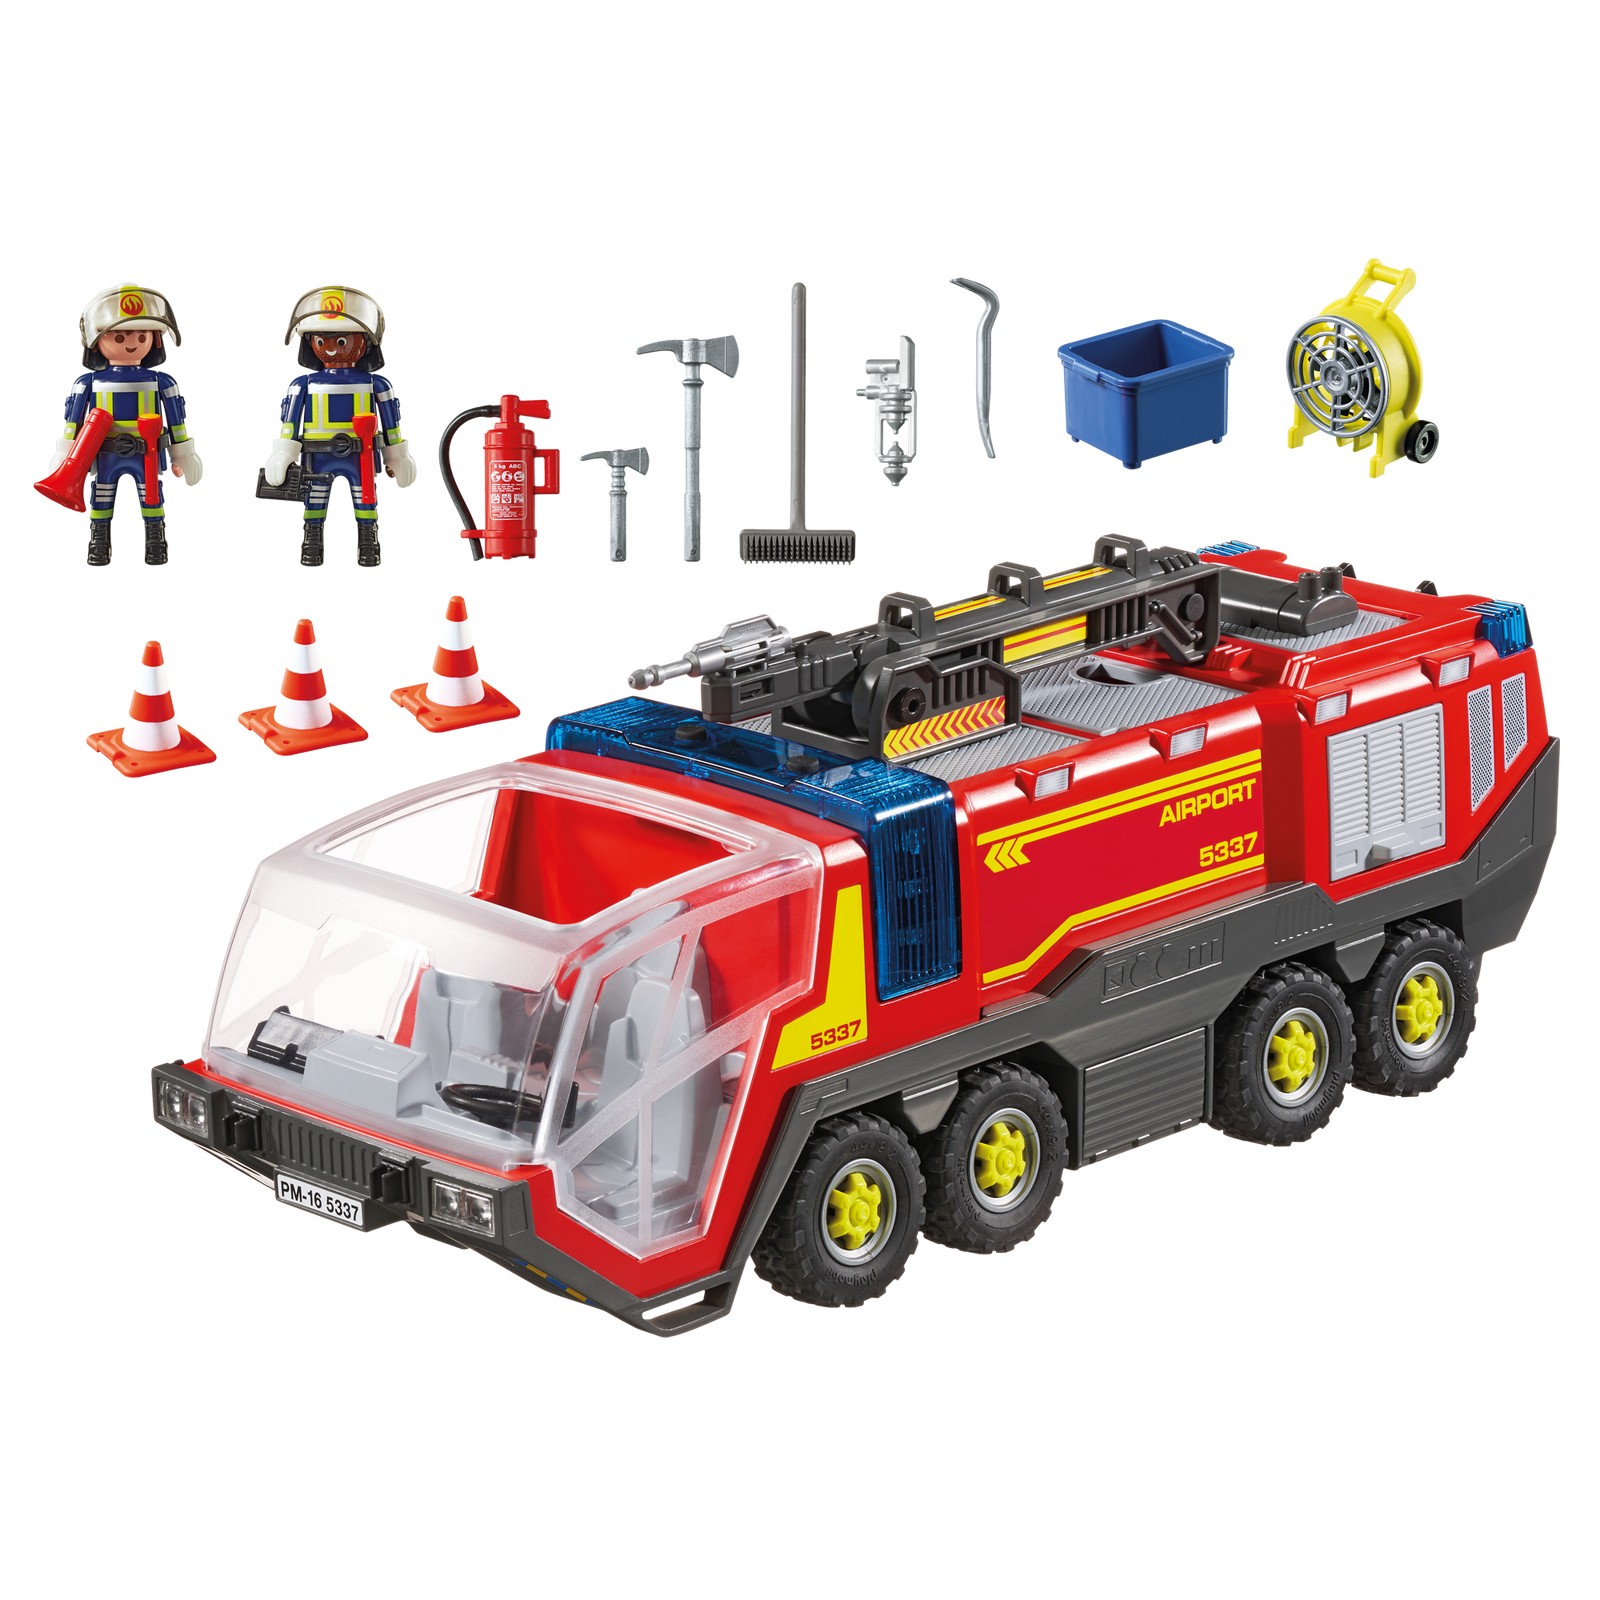 Playmobil Пожарная машина аэропорта (5337) - зображення 1